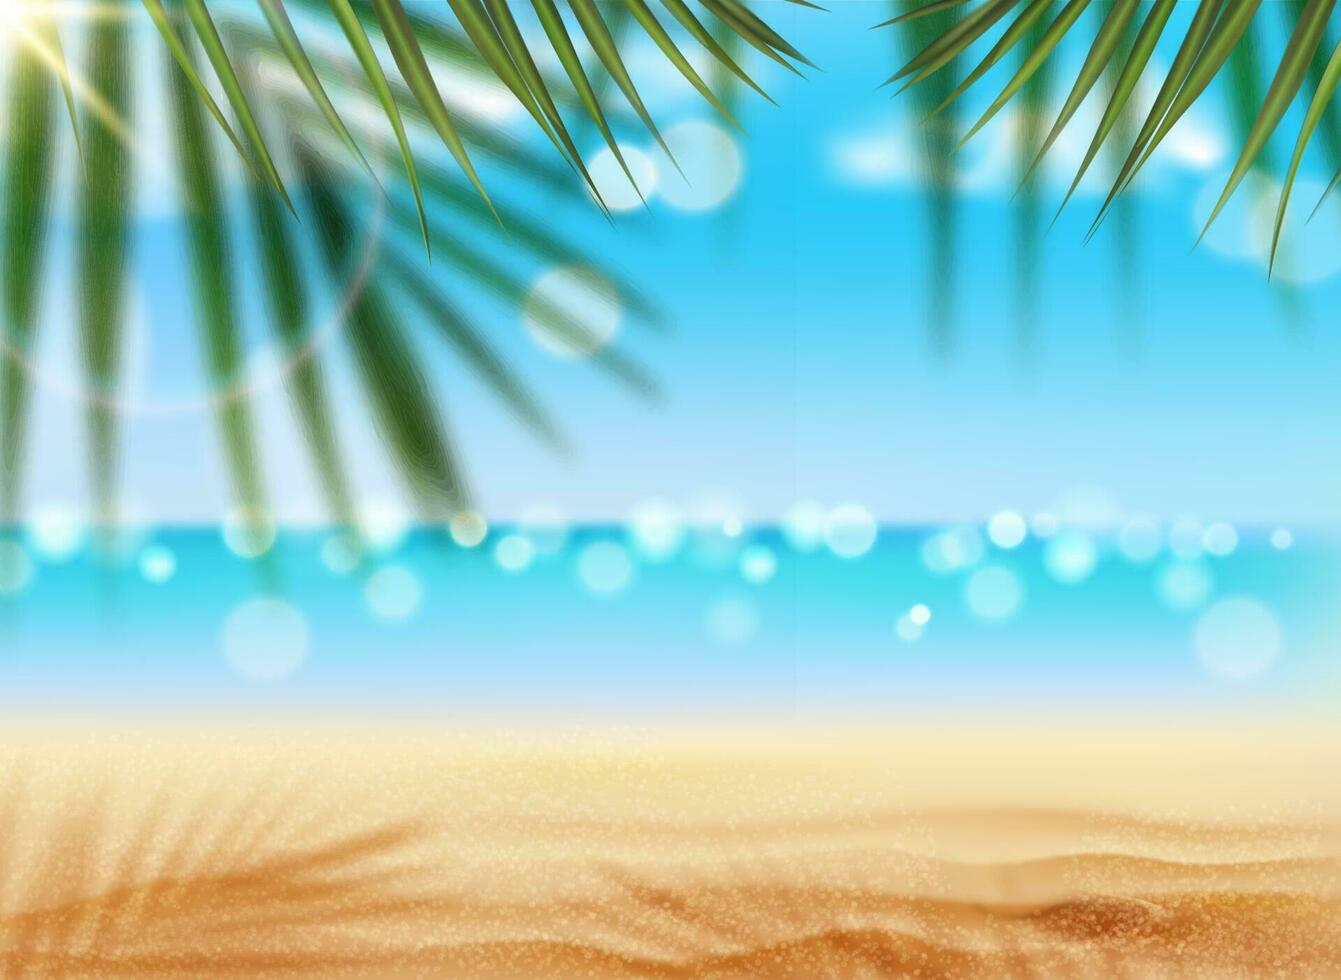 palm strand landschap, boom silhouetten en zand vector